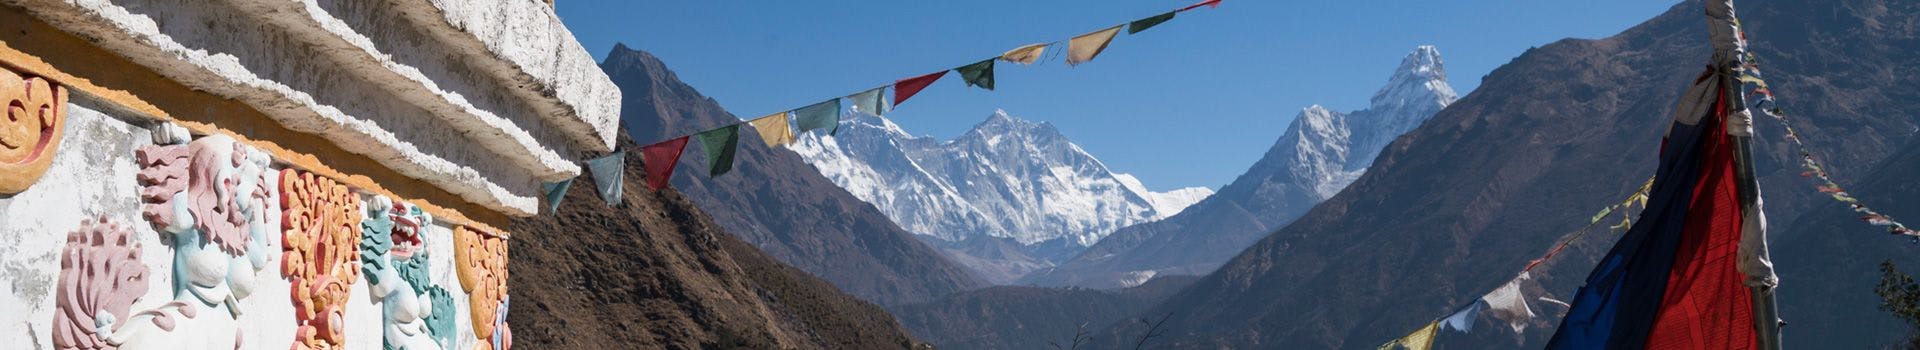 Everest Base Camp/Kalapathhar Trek